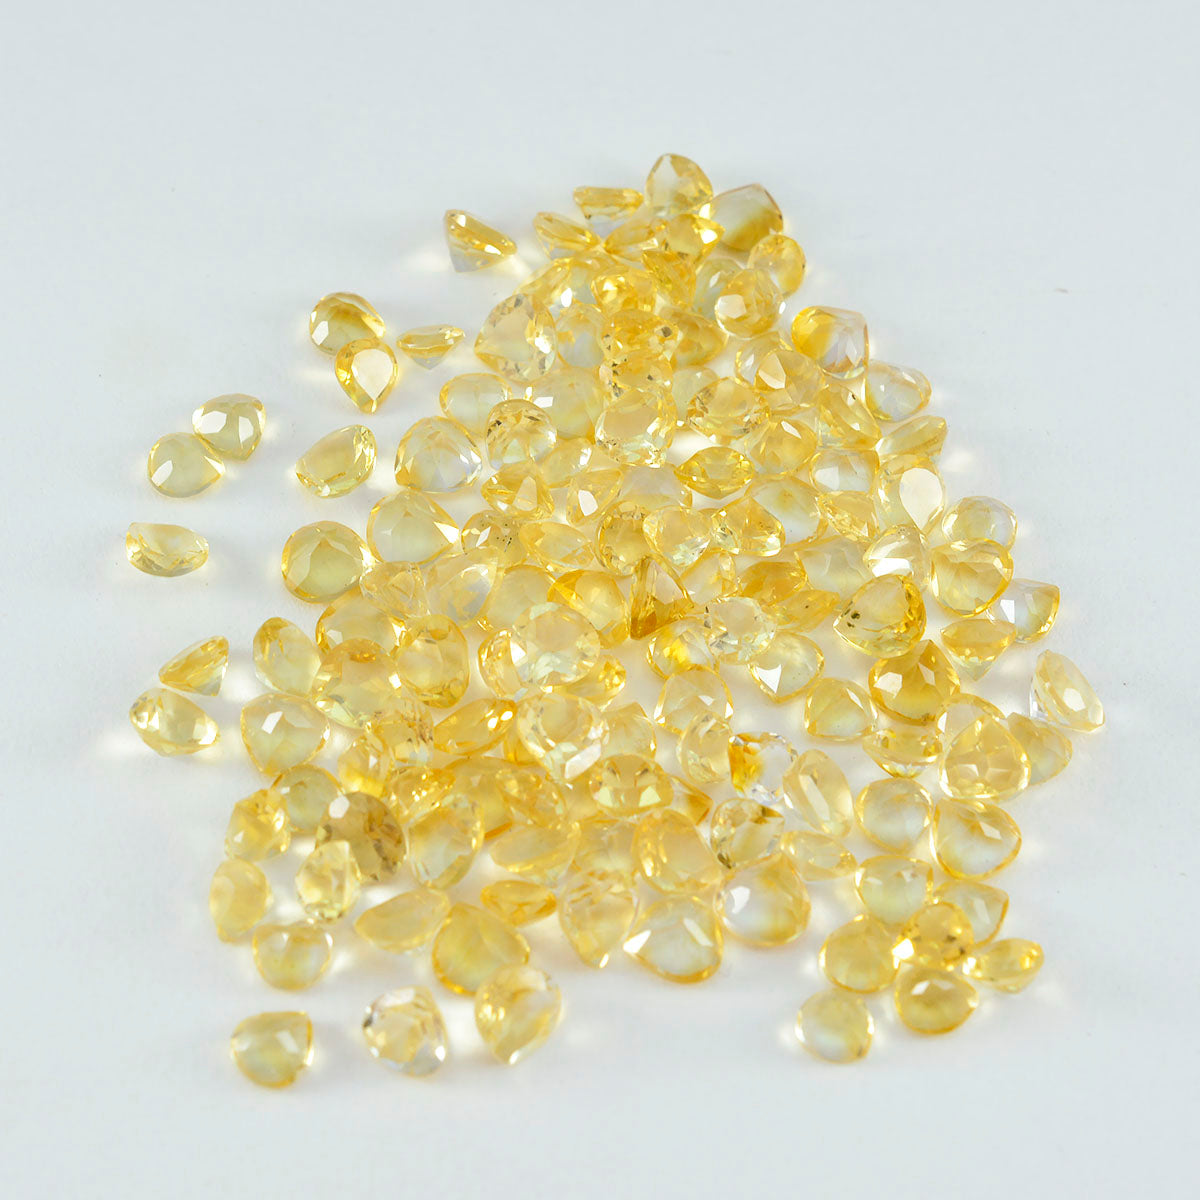 Riyogems 1PC Genuine Yellow Citrine Faceted 4x4 mm Heart Shape startling Quality Loose Gems